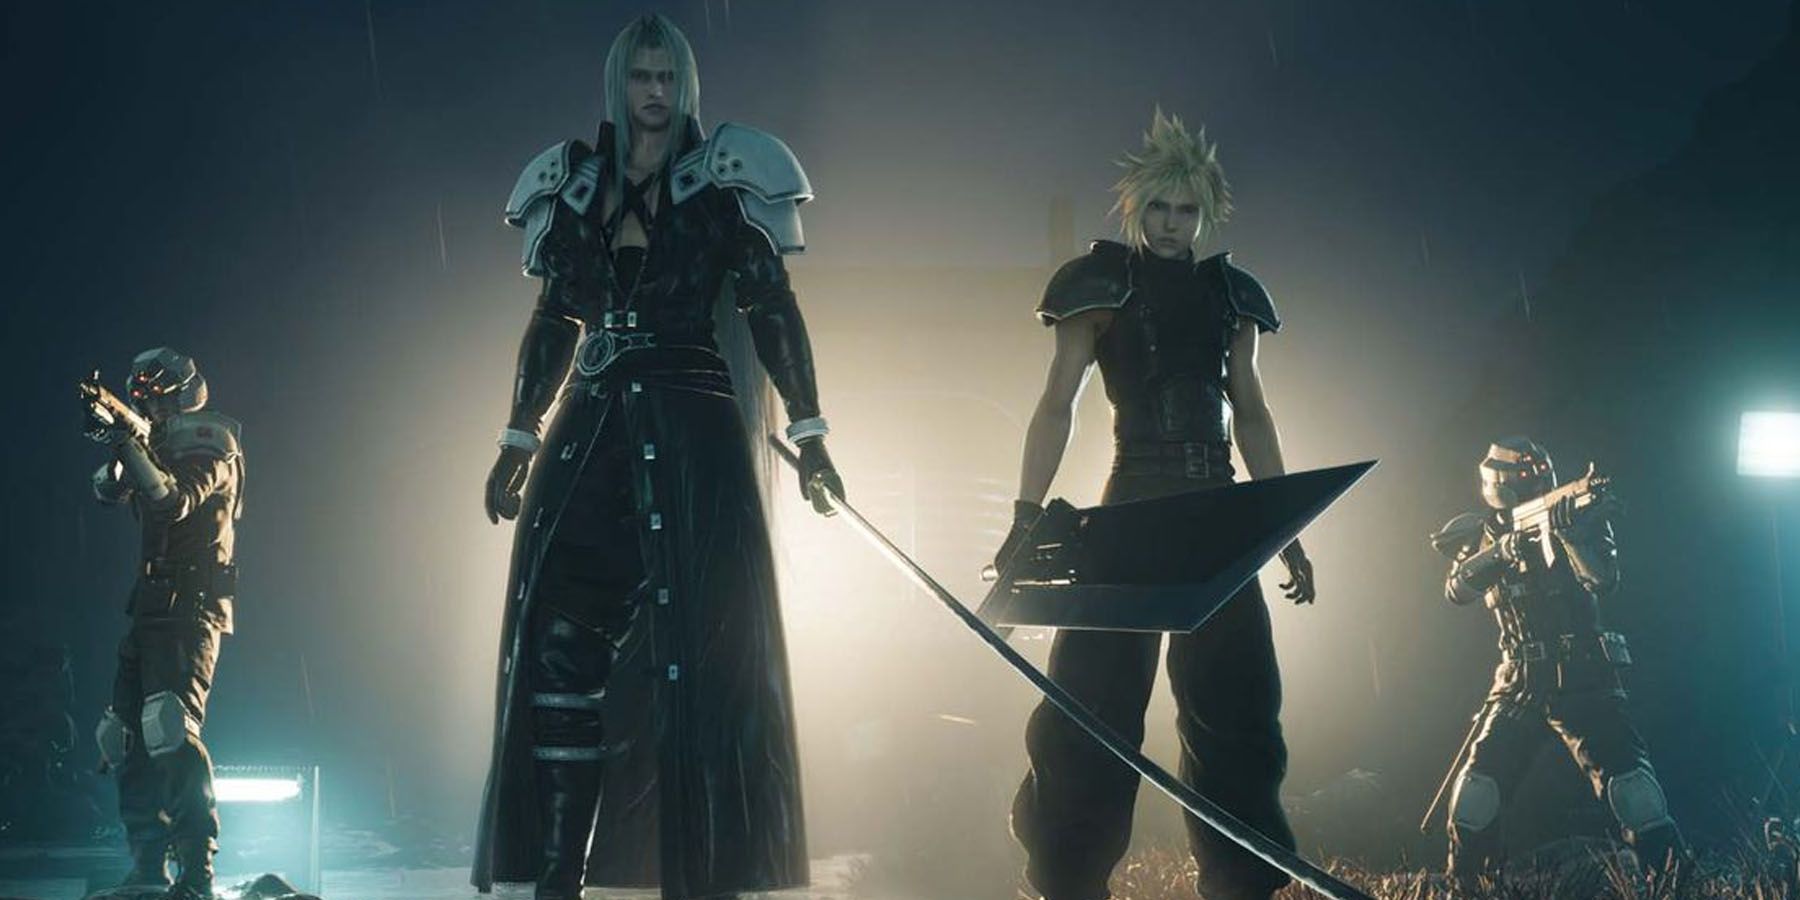 Final Fantasy 7 (VII) Rebirth - Save Data & Demo Progress Explained